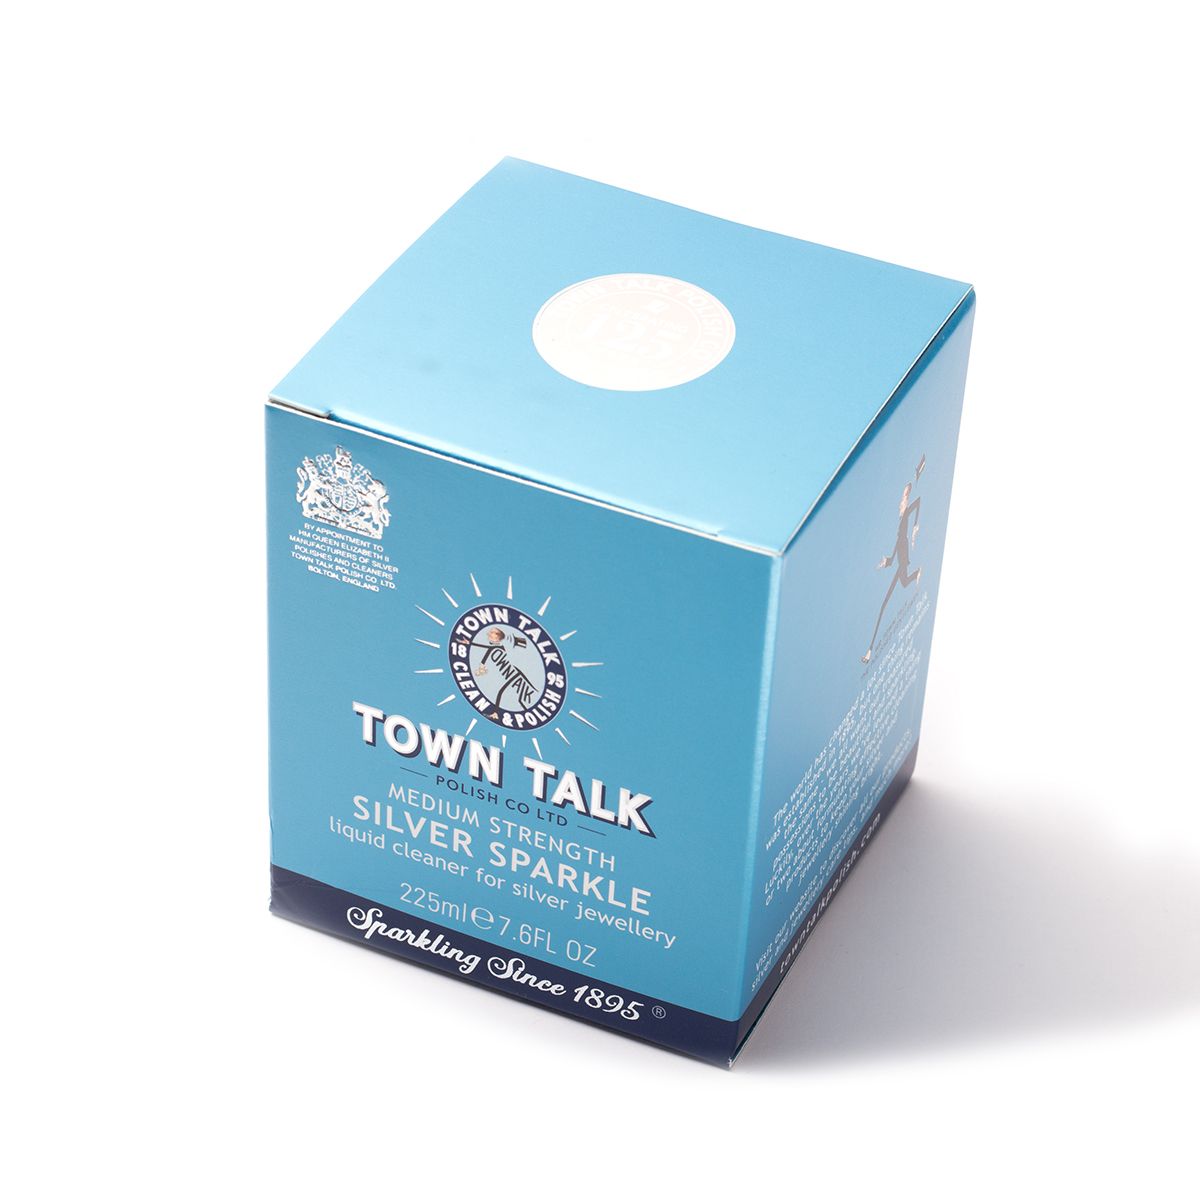 Town Talk Silver Sparkle, 225ml